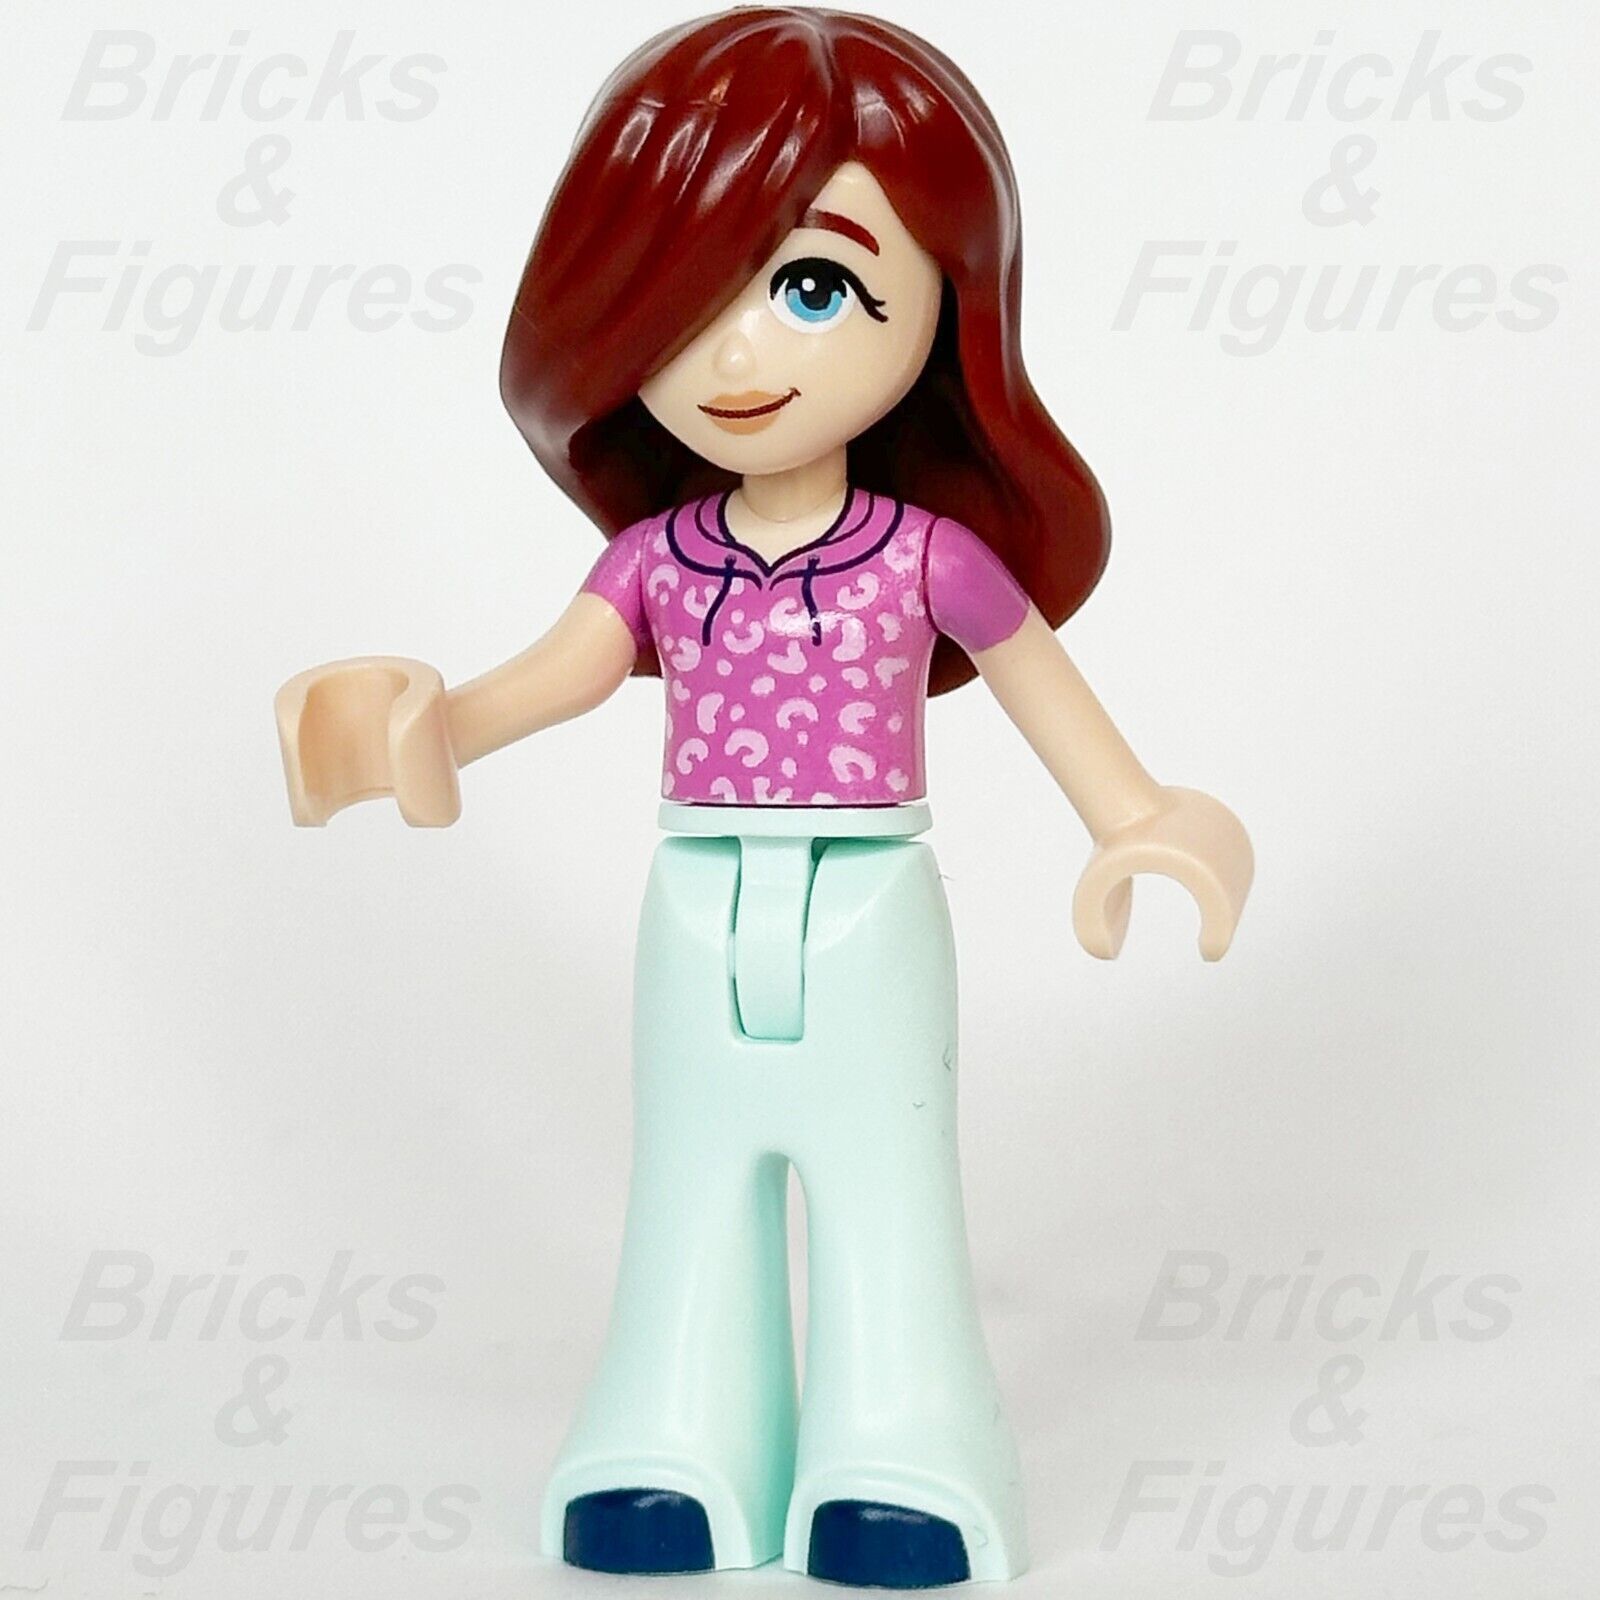 LEGO Friends Paisley Minifigure Pink Hoodie Blue Shoes Minifig 41735 frnd582